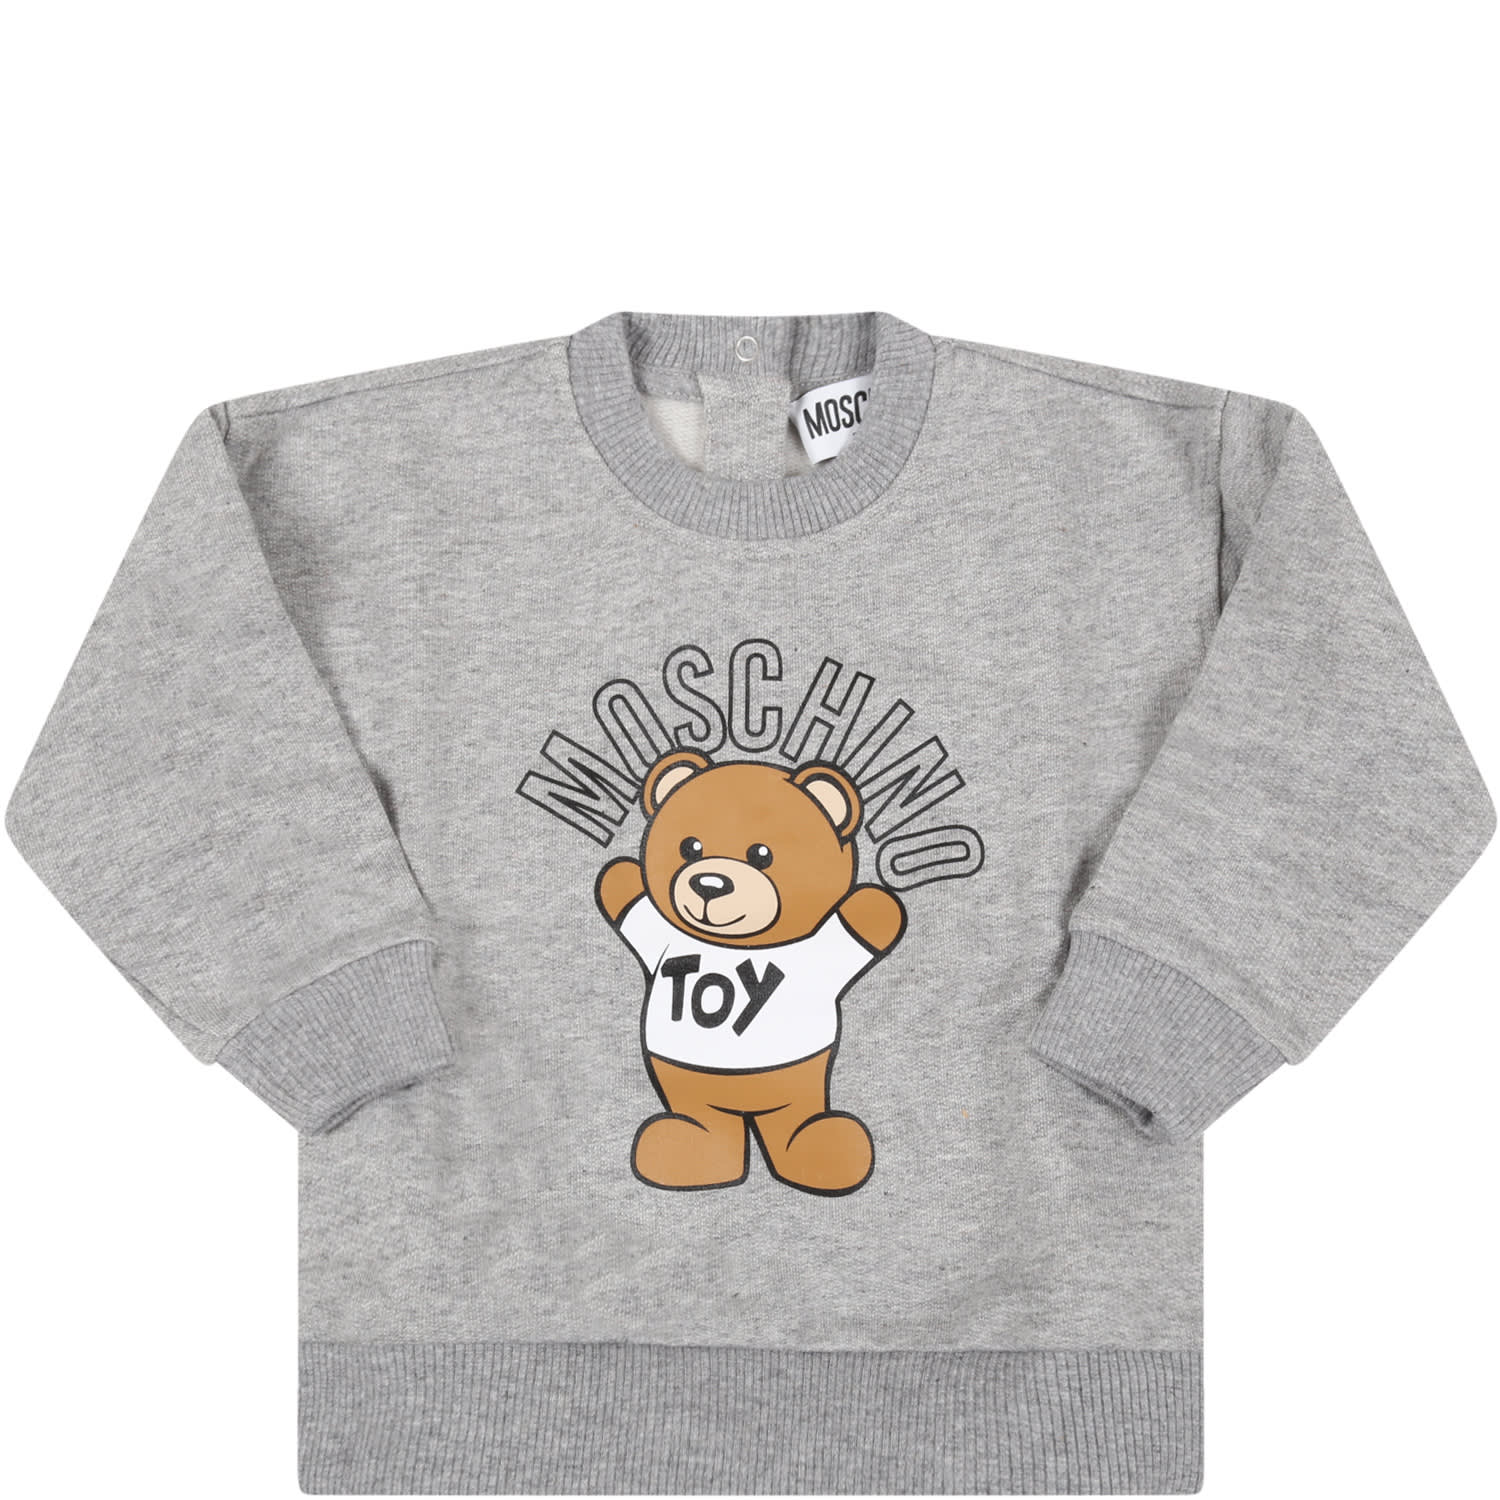 Moschino Grey Dress For Baby Kids With Teddy Bear